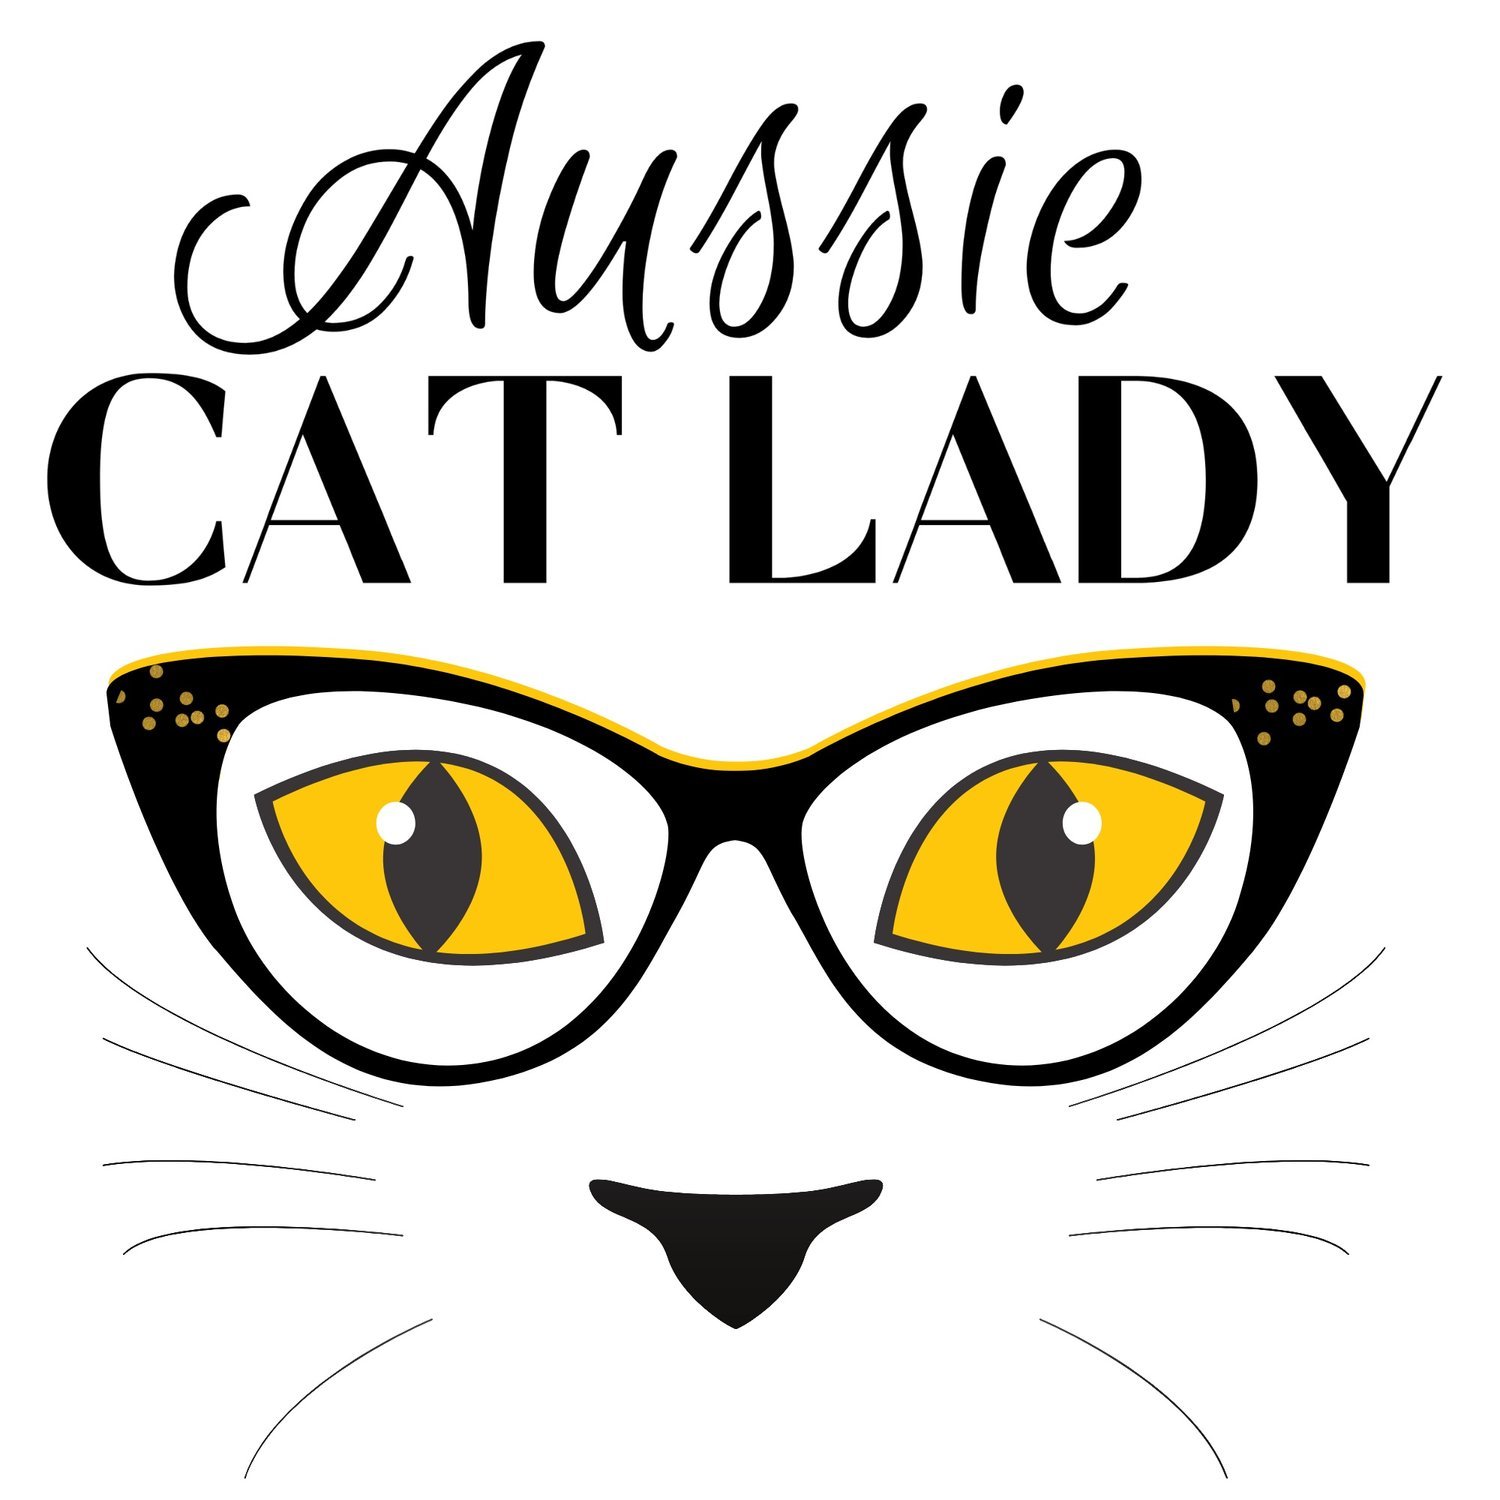 Aussie Cat Lady.jpeg